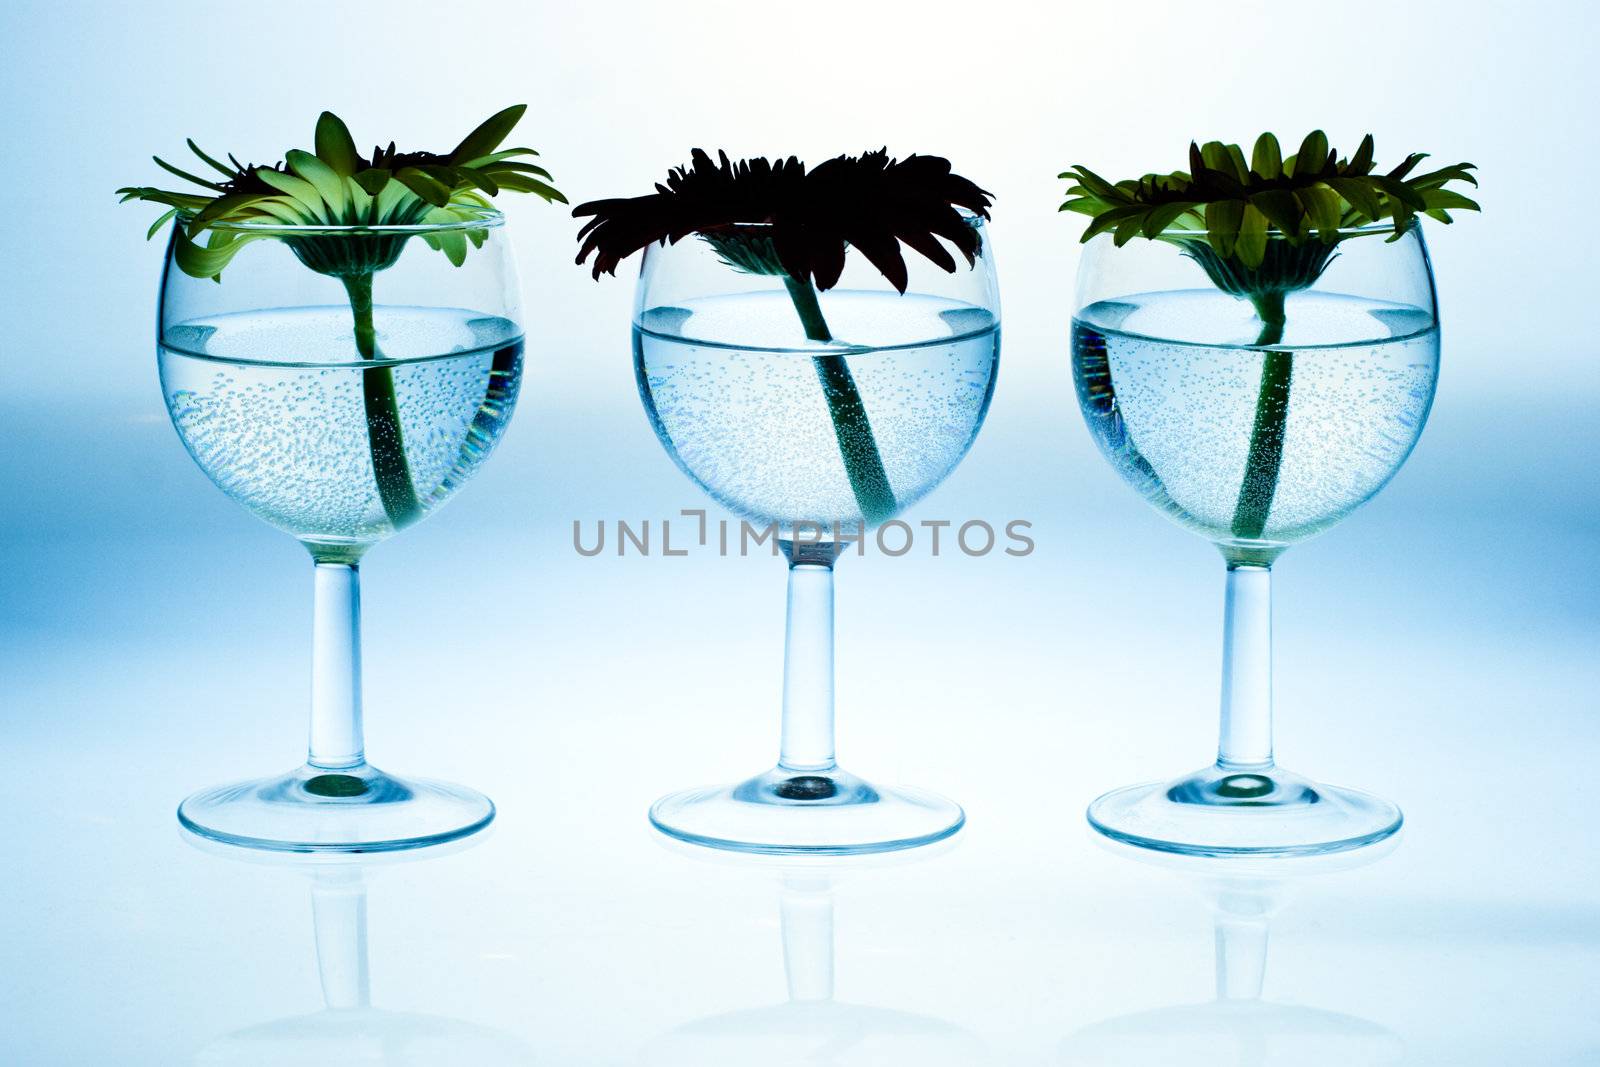 Gerbera flowers in wine glasses with water